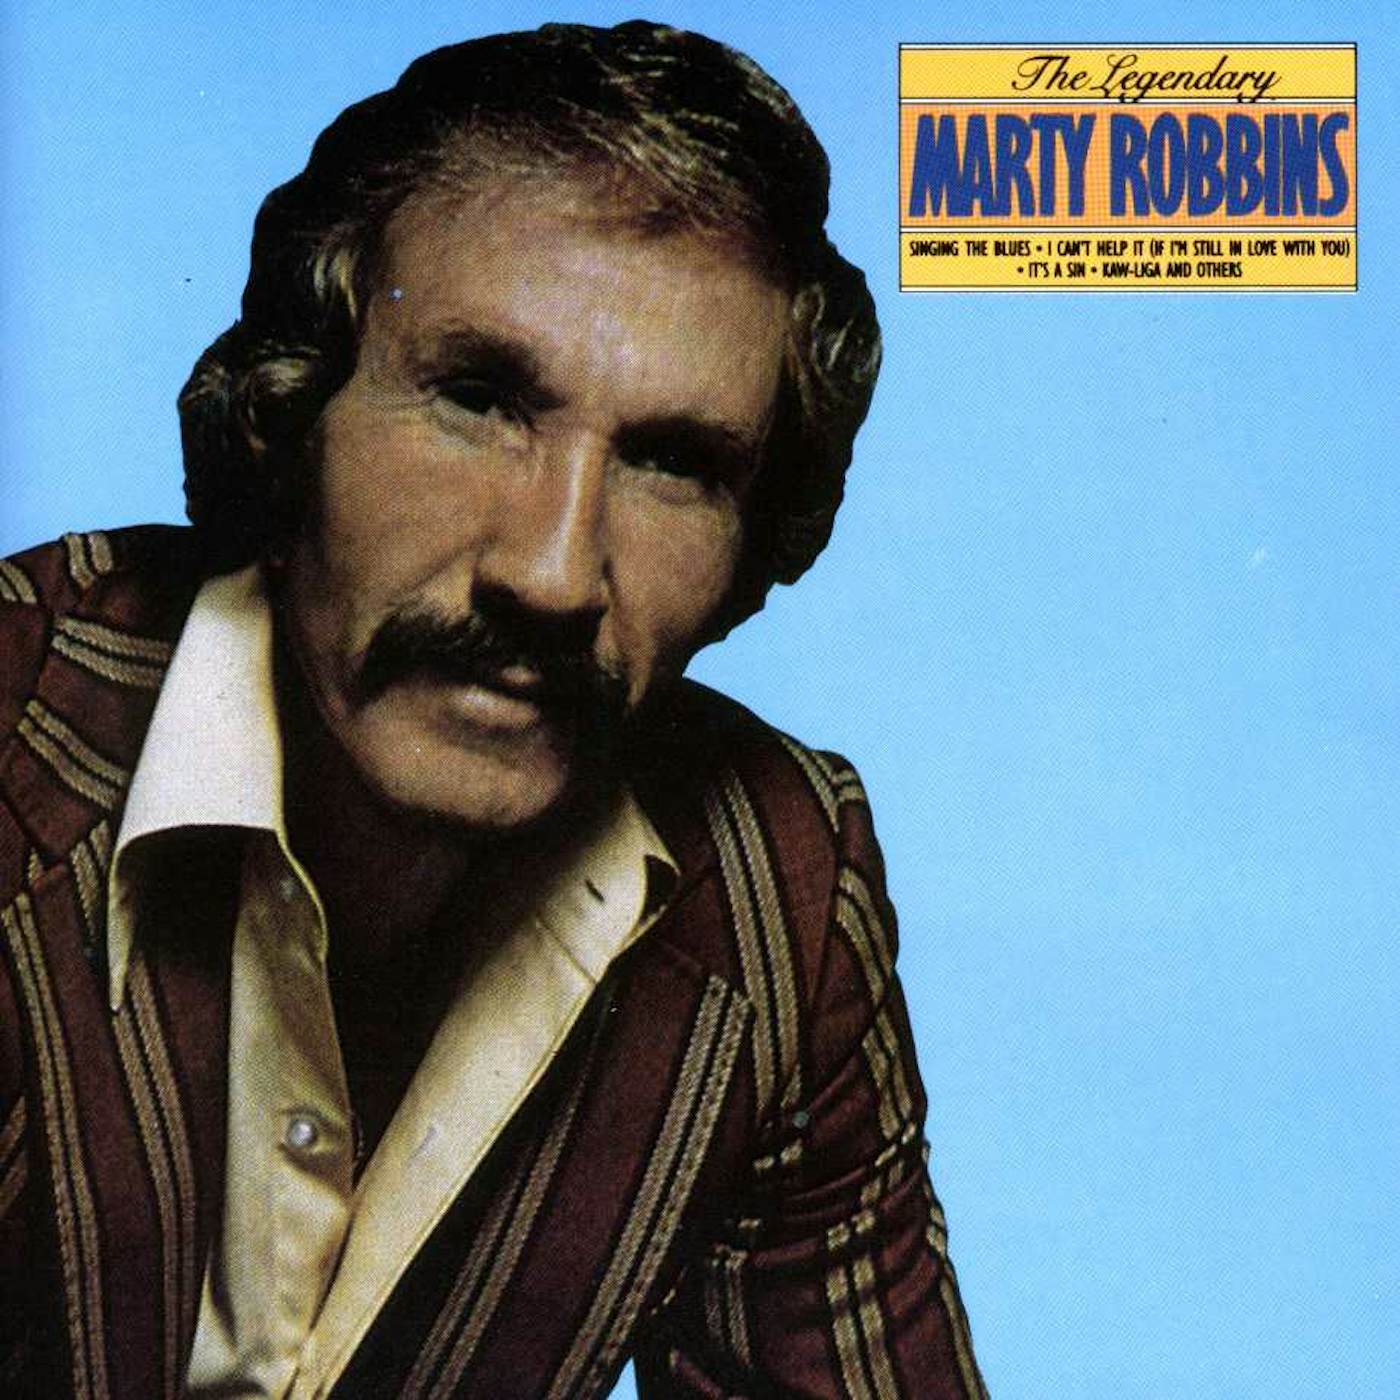 Marty Robbins LEGENDARY CD